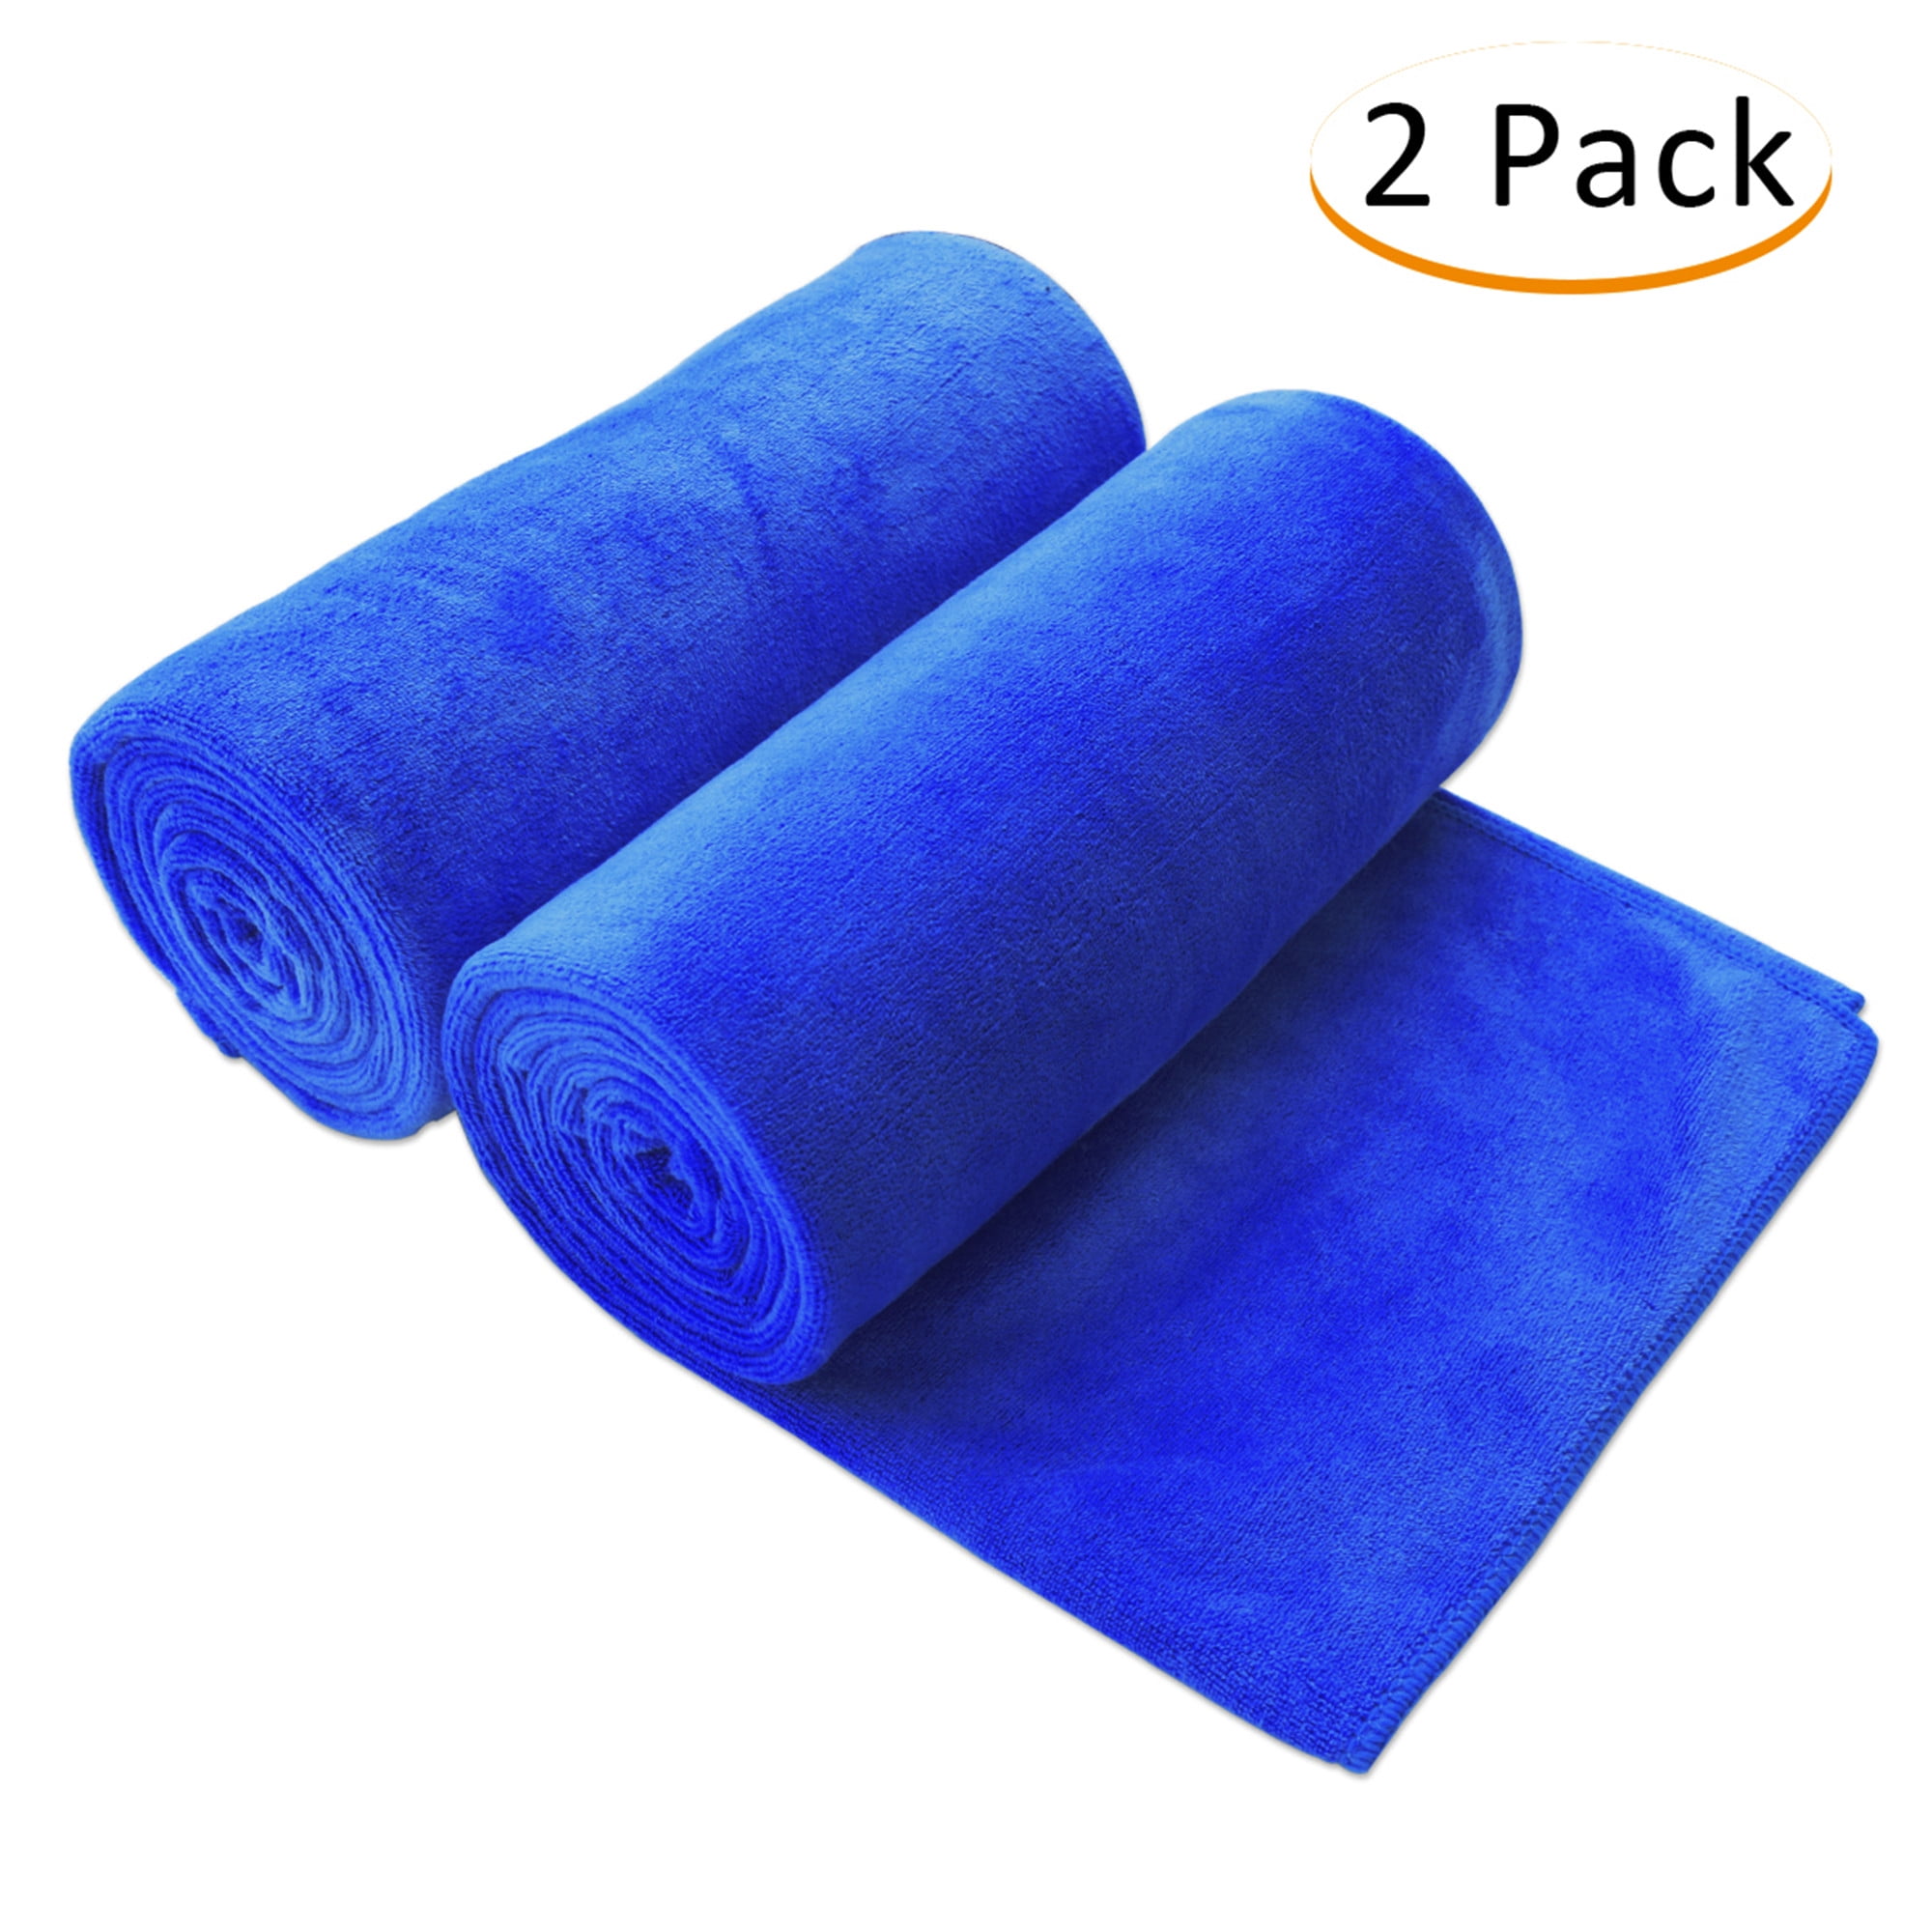 2x Microfibre Absorbent Soft Beach Bath Hand Sports Travel Gym Lightweight Towel 